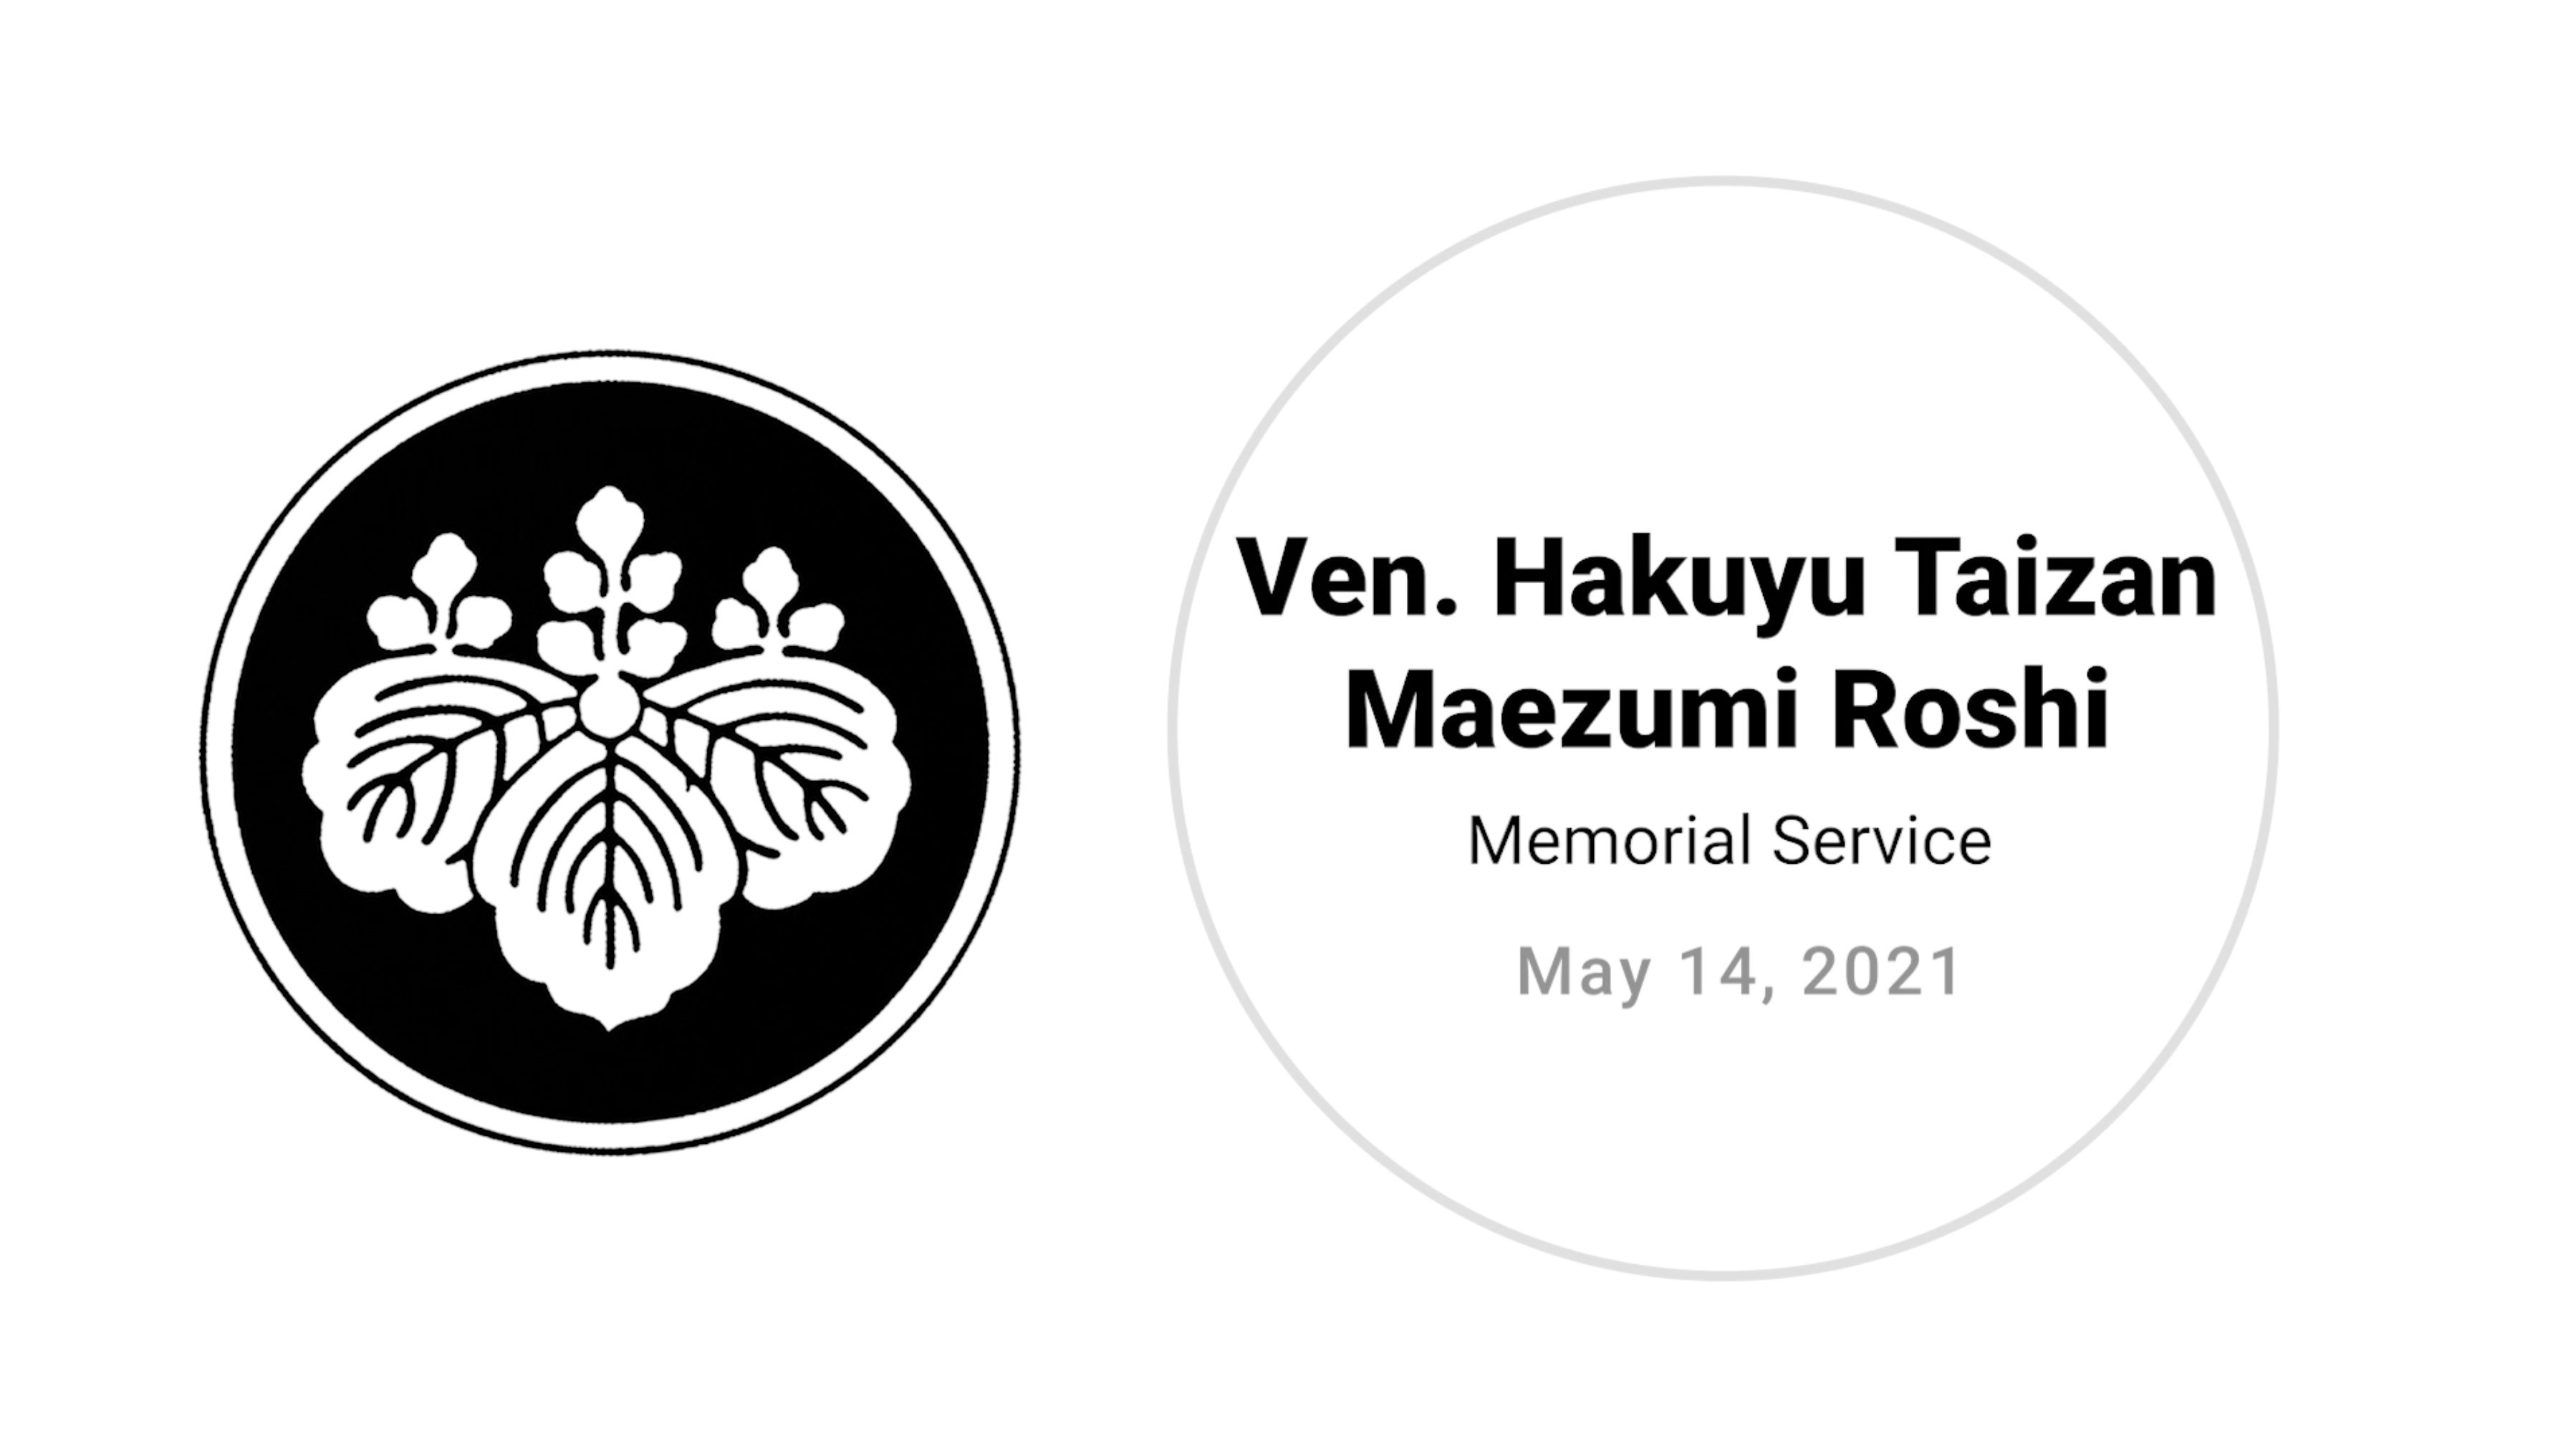 Ven. Hakuyu Taizan Maezumi Roshi – 26th Year Anniversary Memorial Service